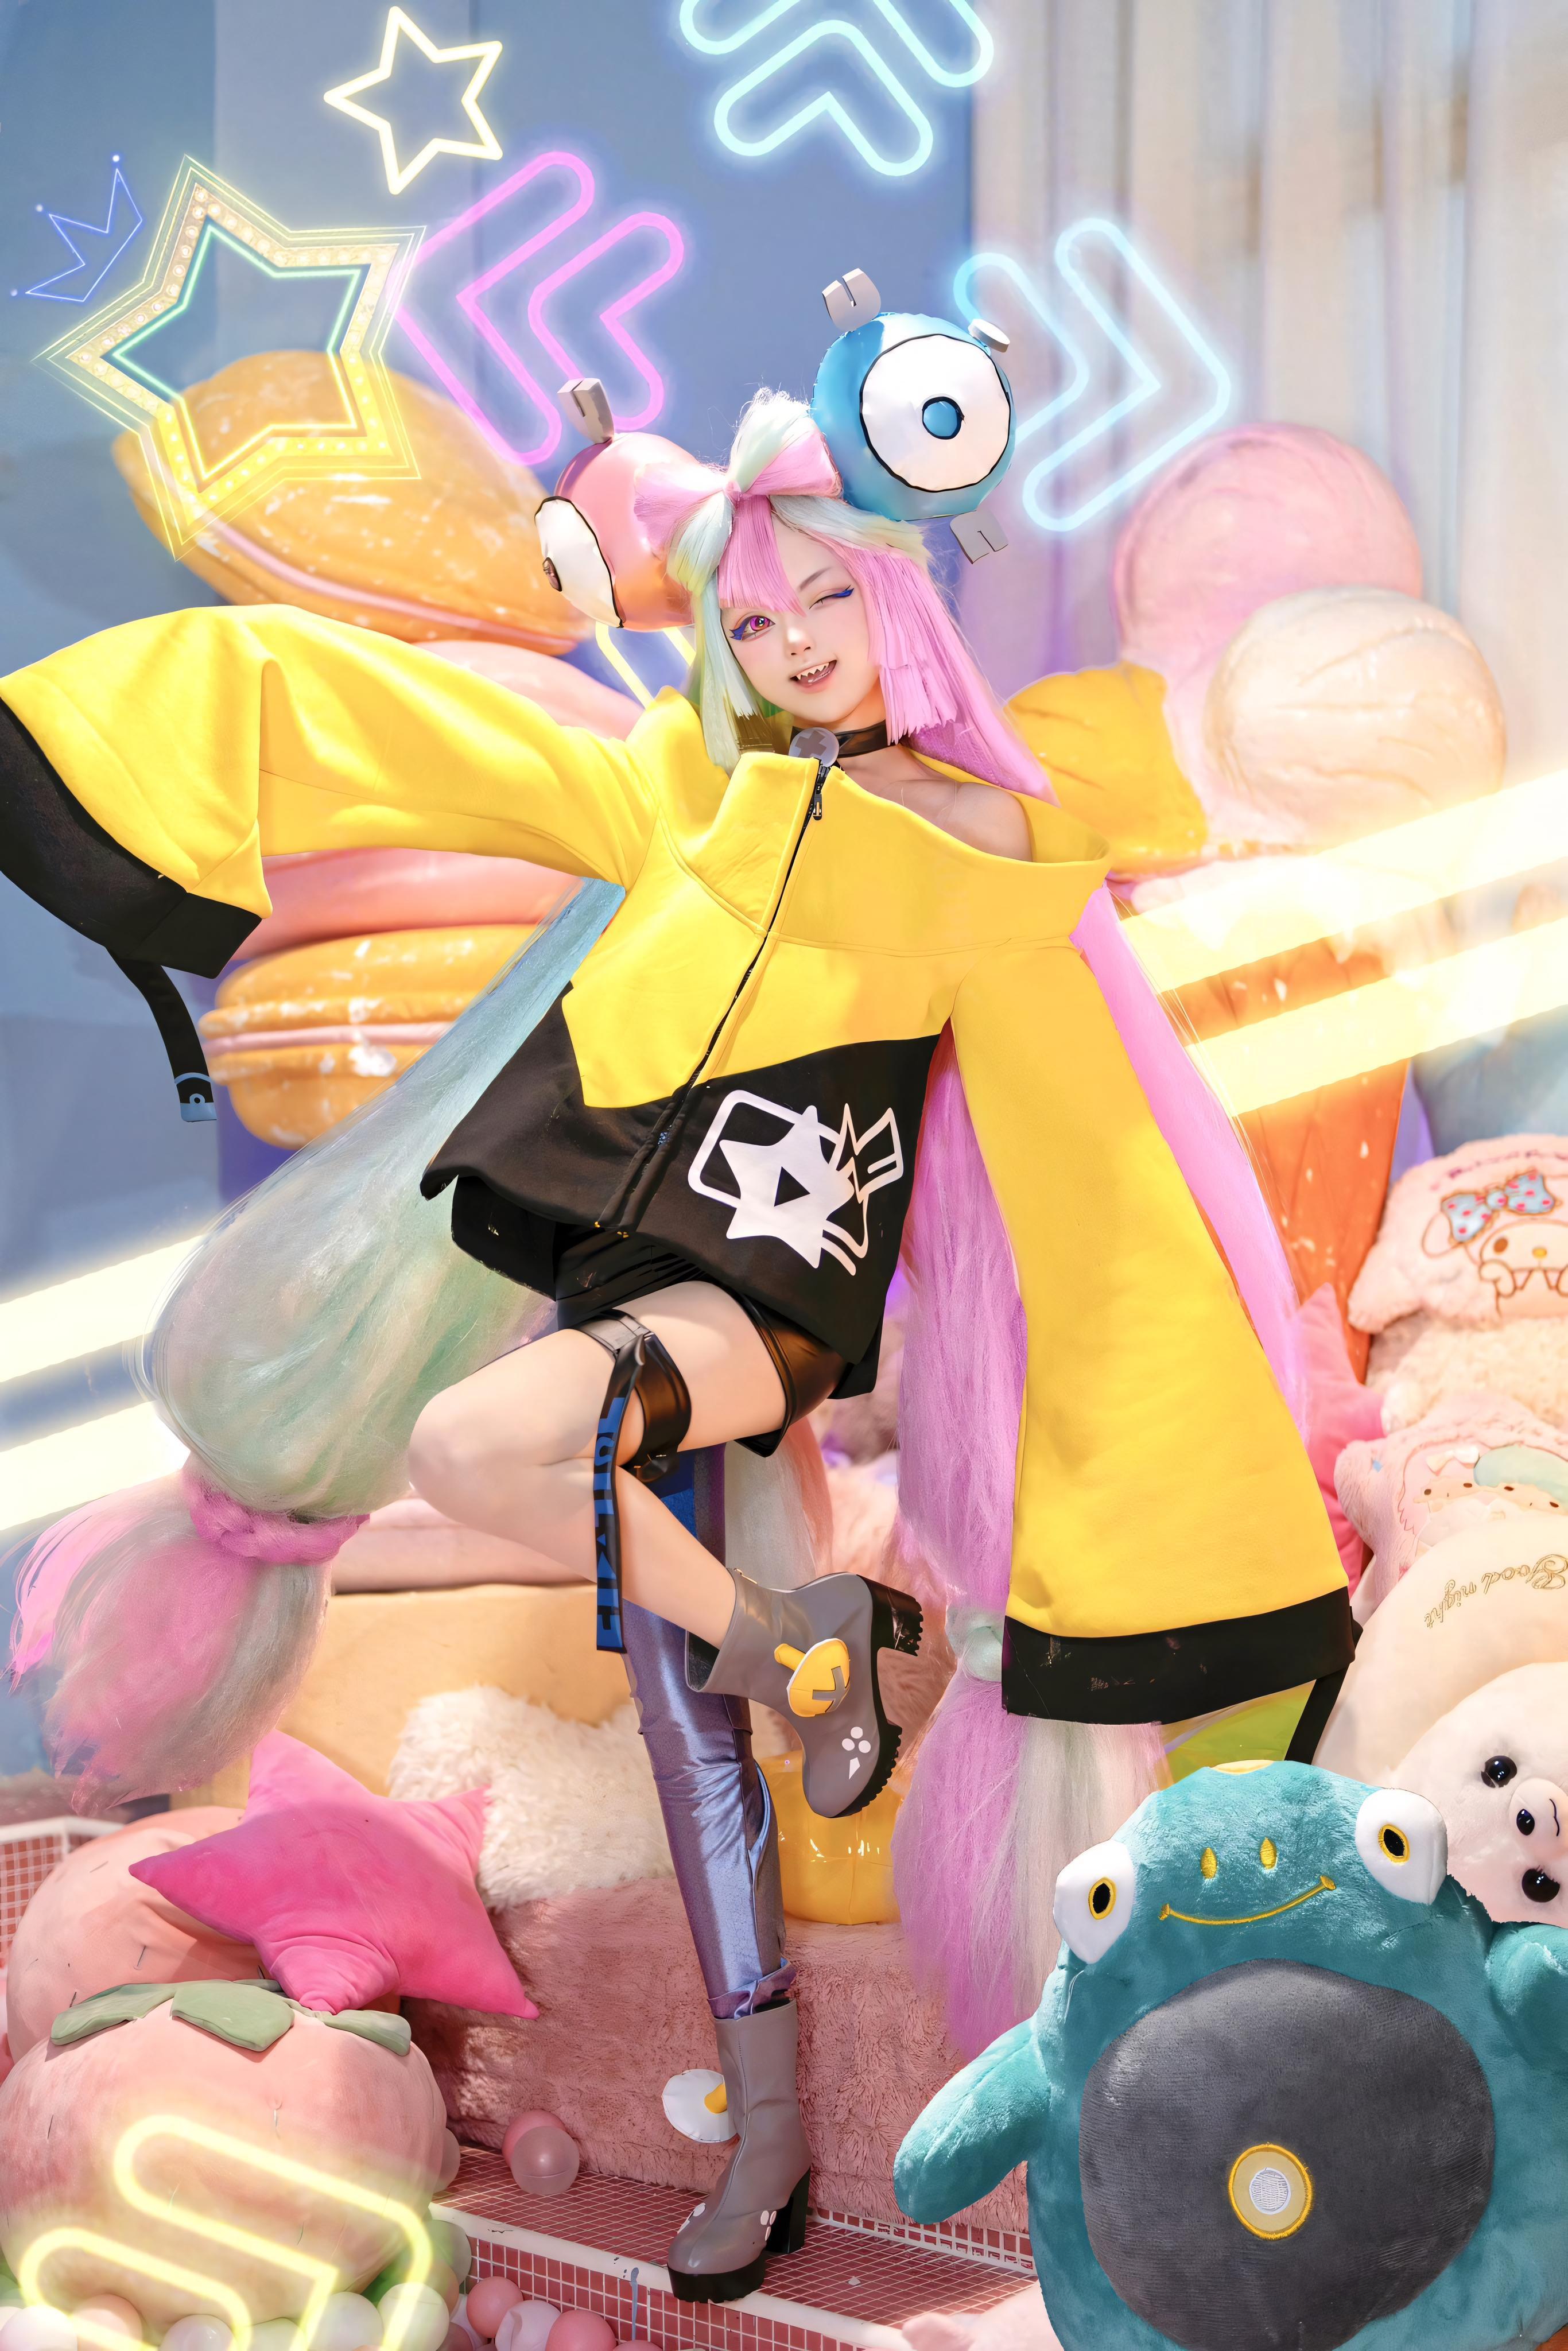 Seeuxiaorou Cosplay Photoshopped Yellow Jacket Smiling Oversized Outfit Pokemon Plush Toy Asian 2732x4096